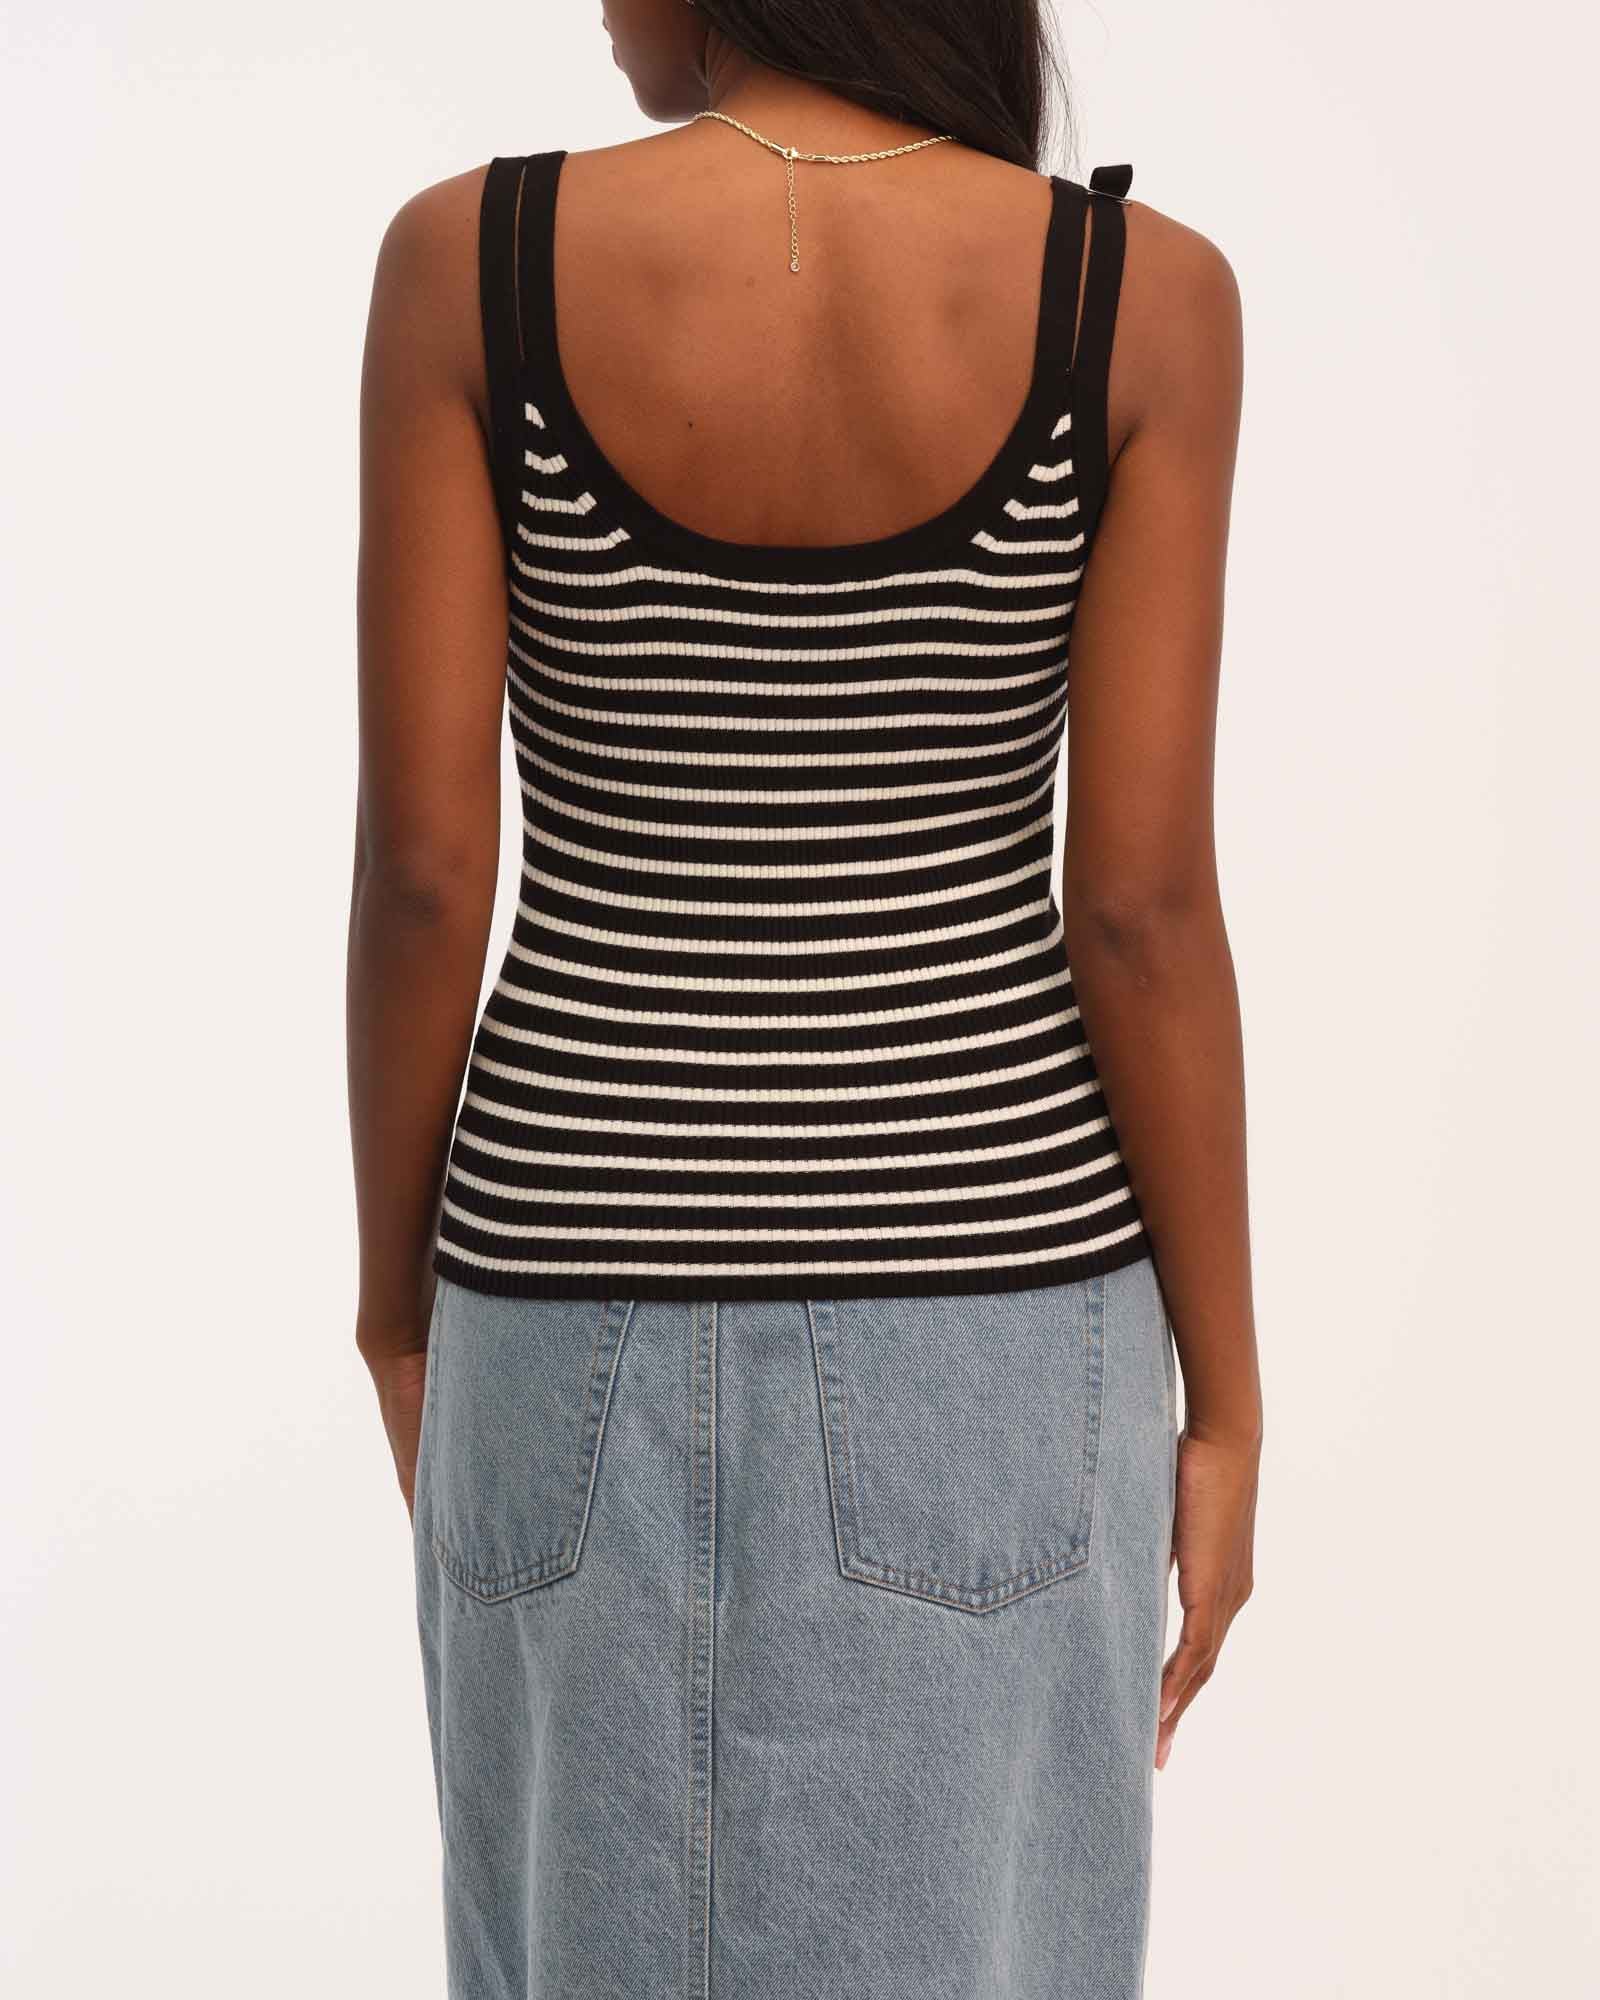 Shop Elie Elie Tahari Women's Sleeveless Striped Rib Sweater Tank | JANE + MERCER